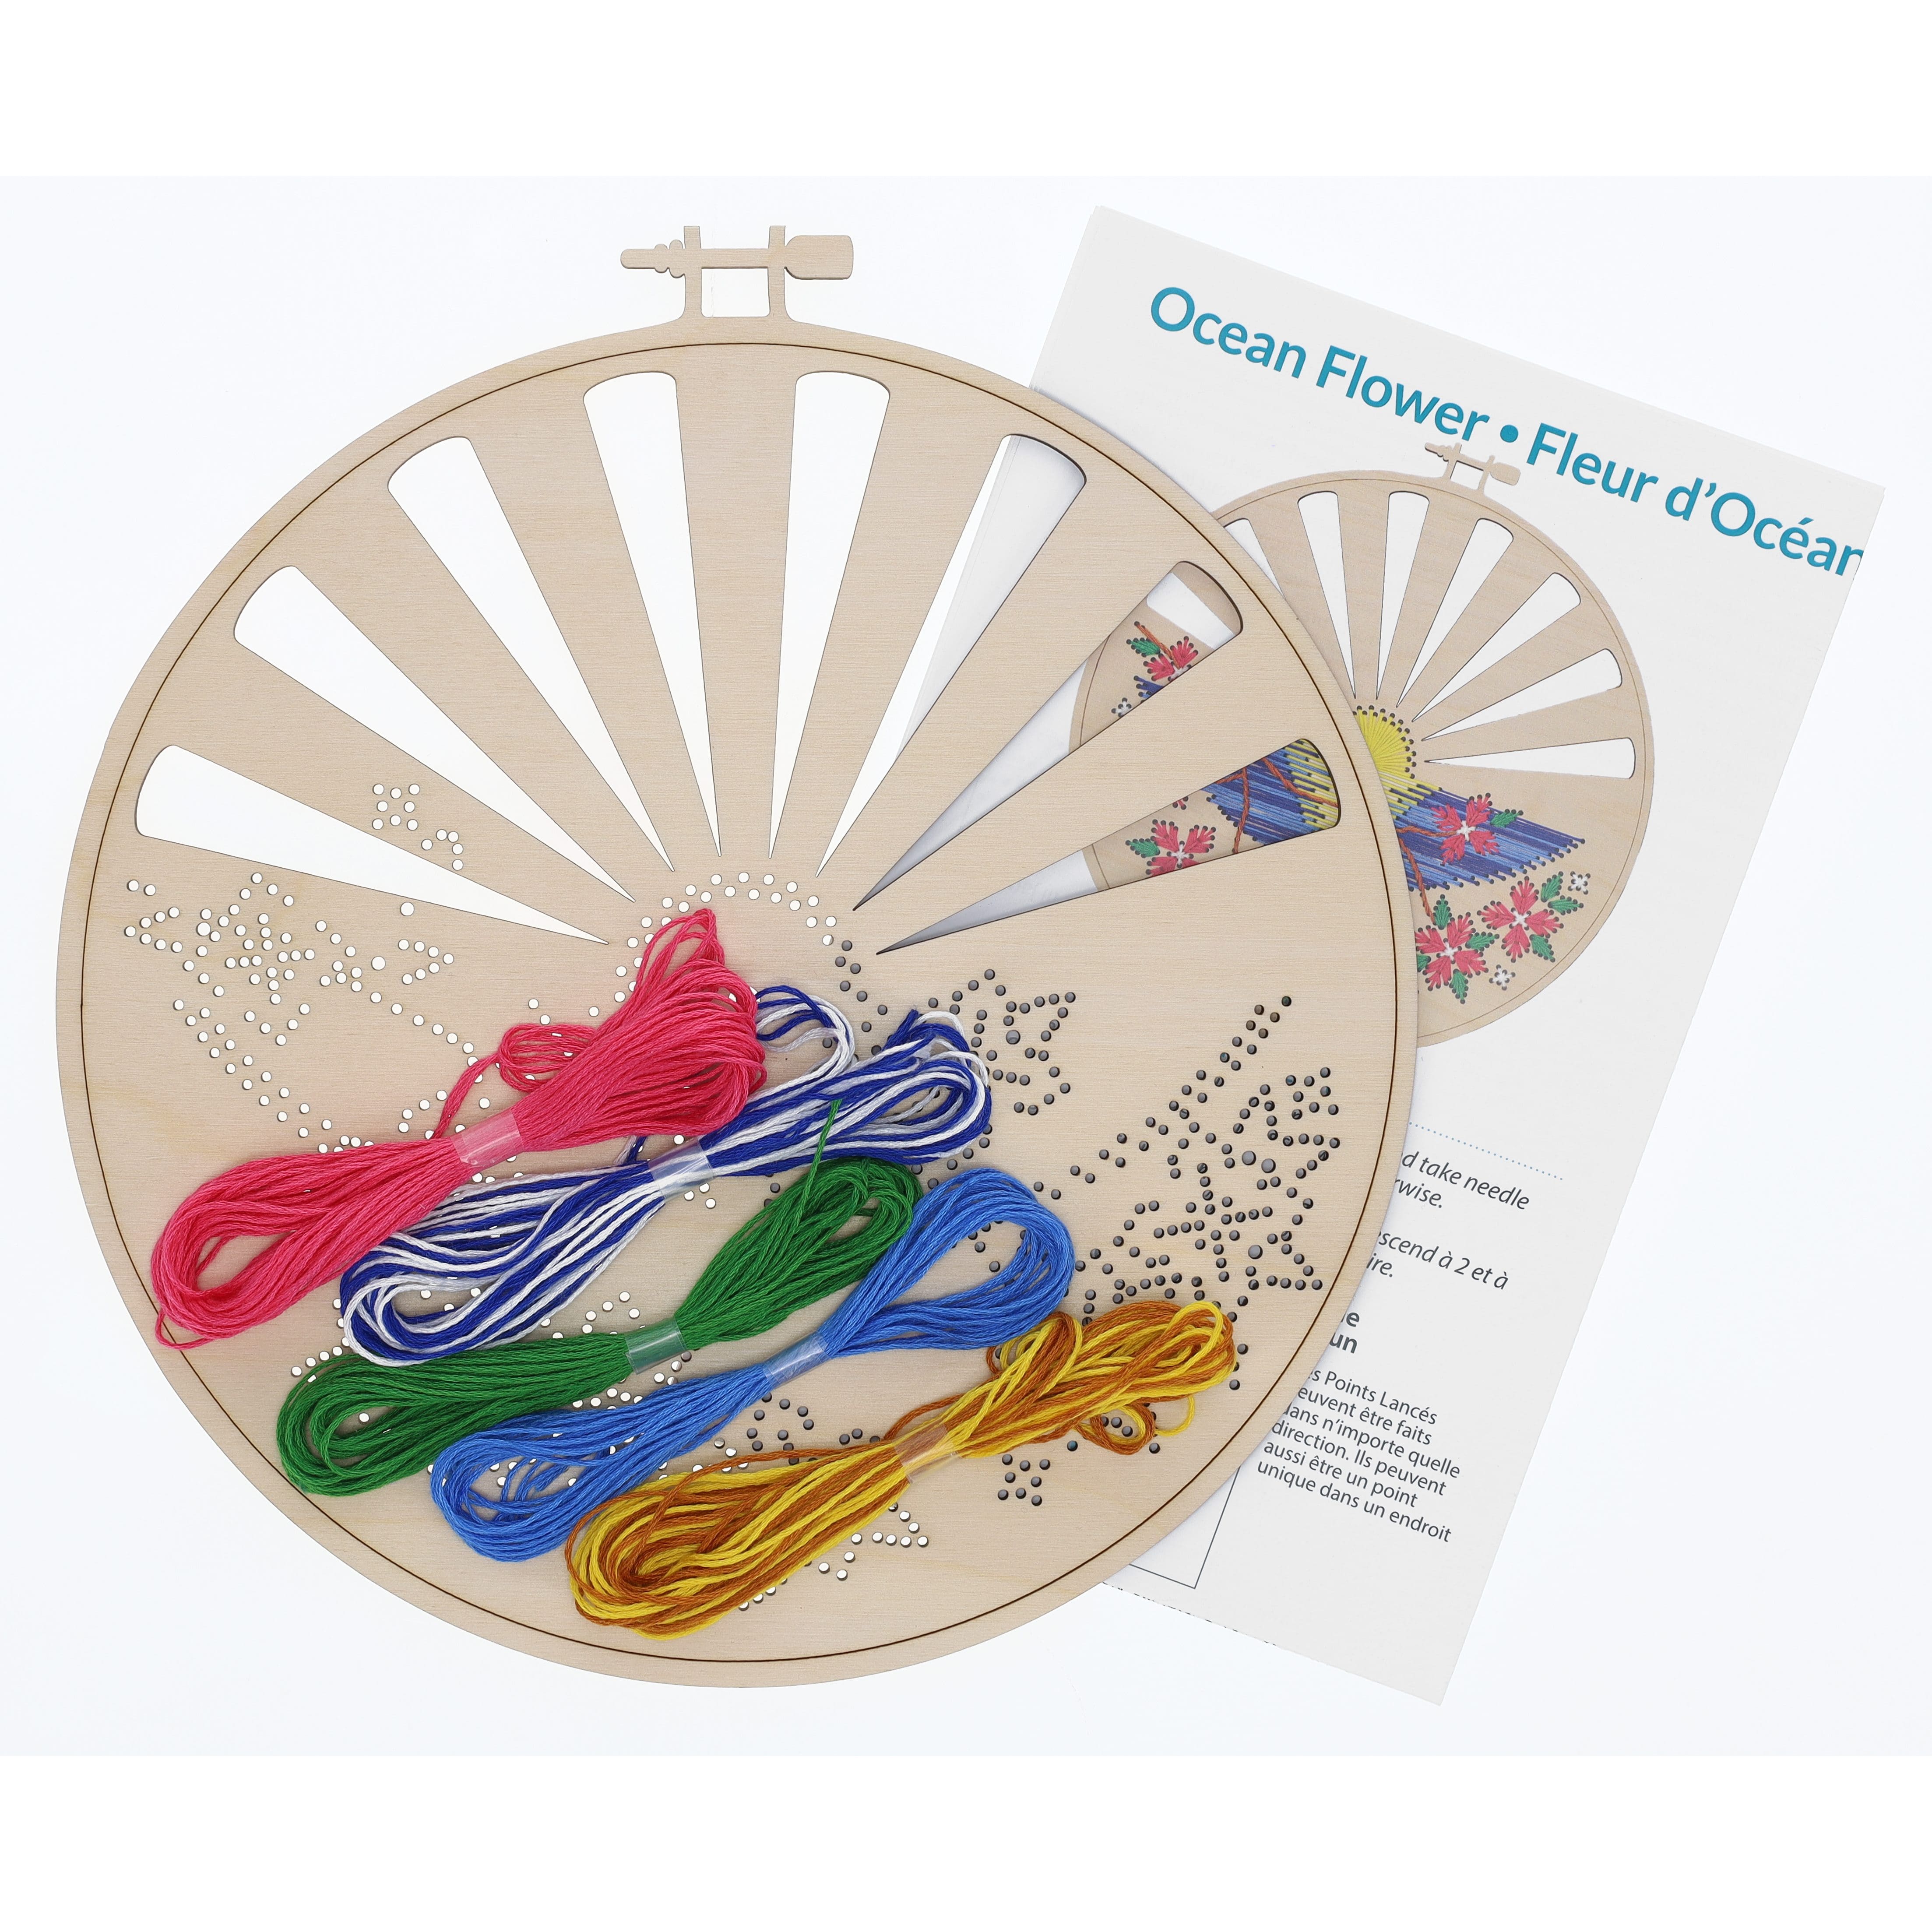 Leisure Arts&#xAE; Advanced Ocean Flower Wood Stitchery Kit